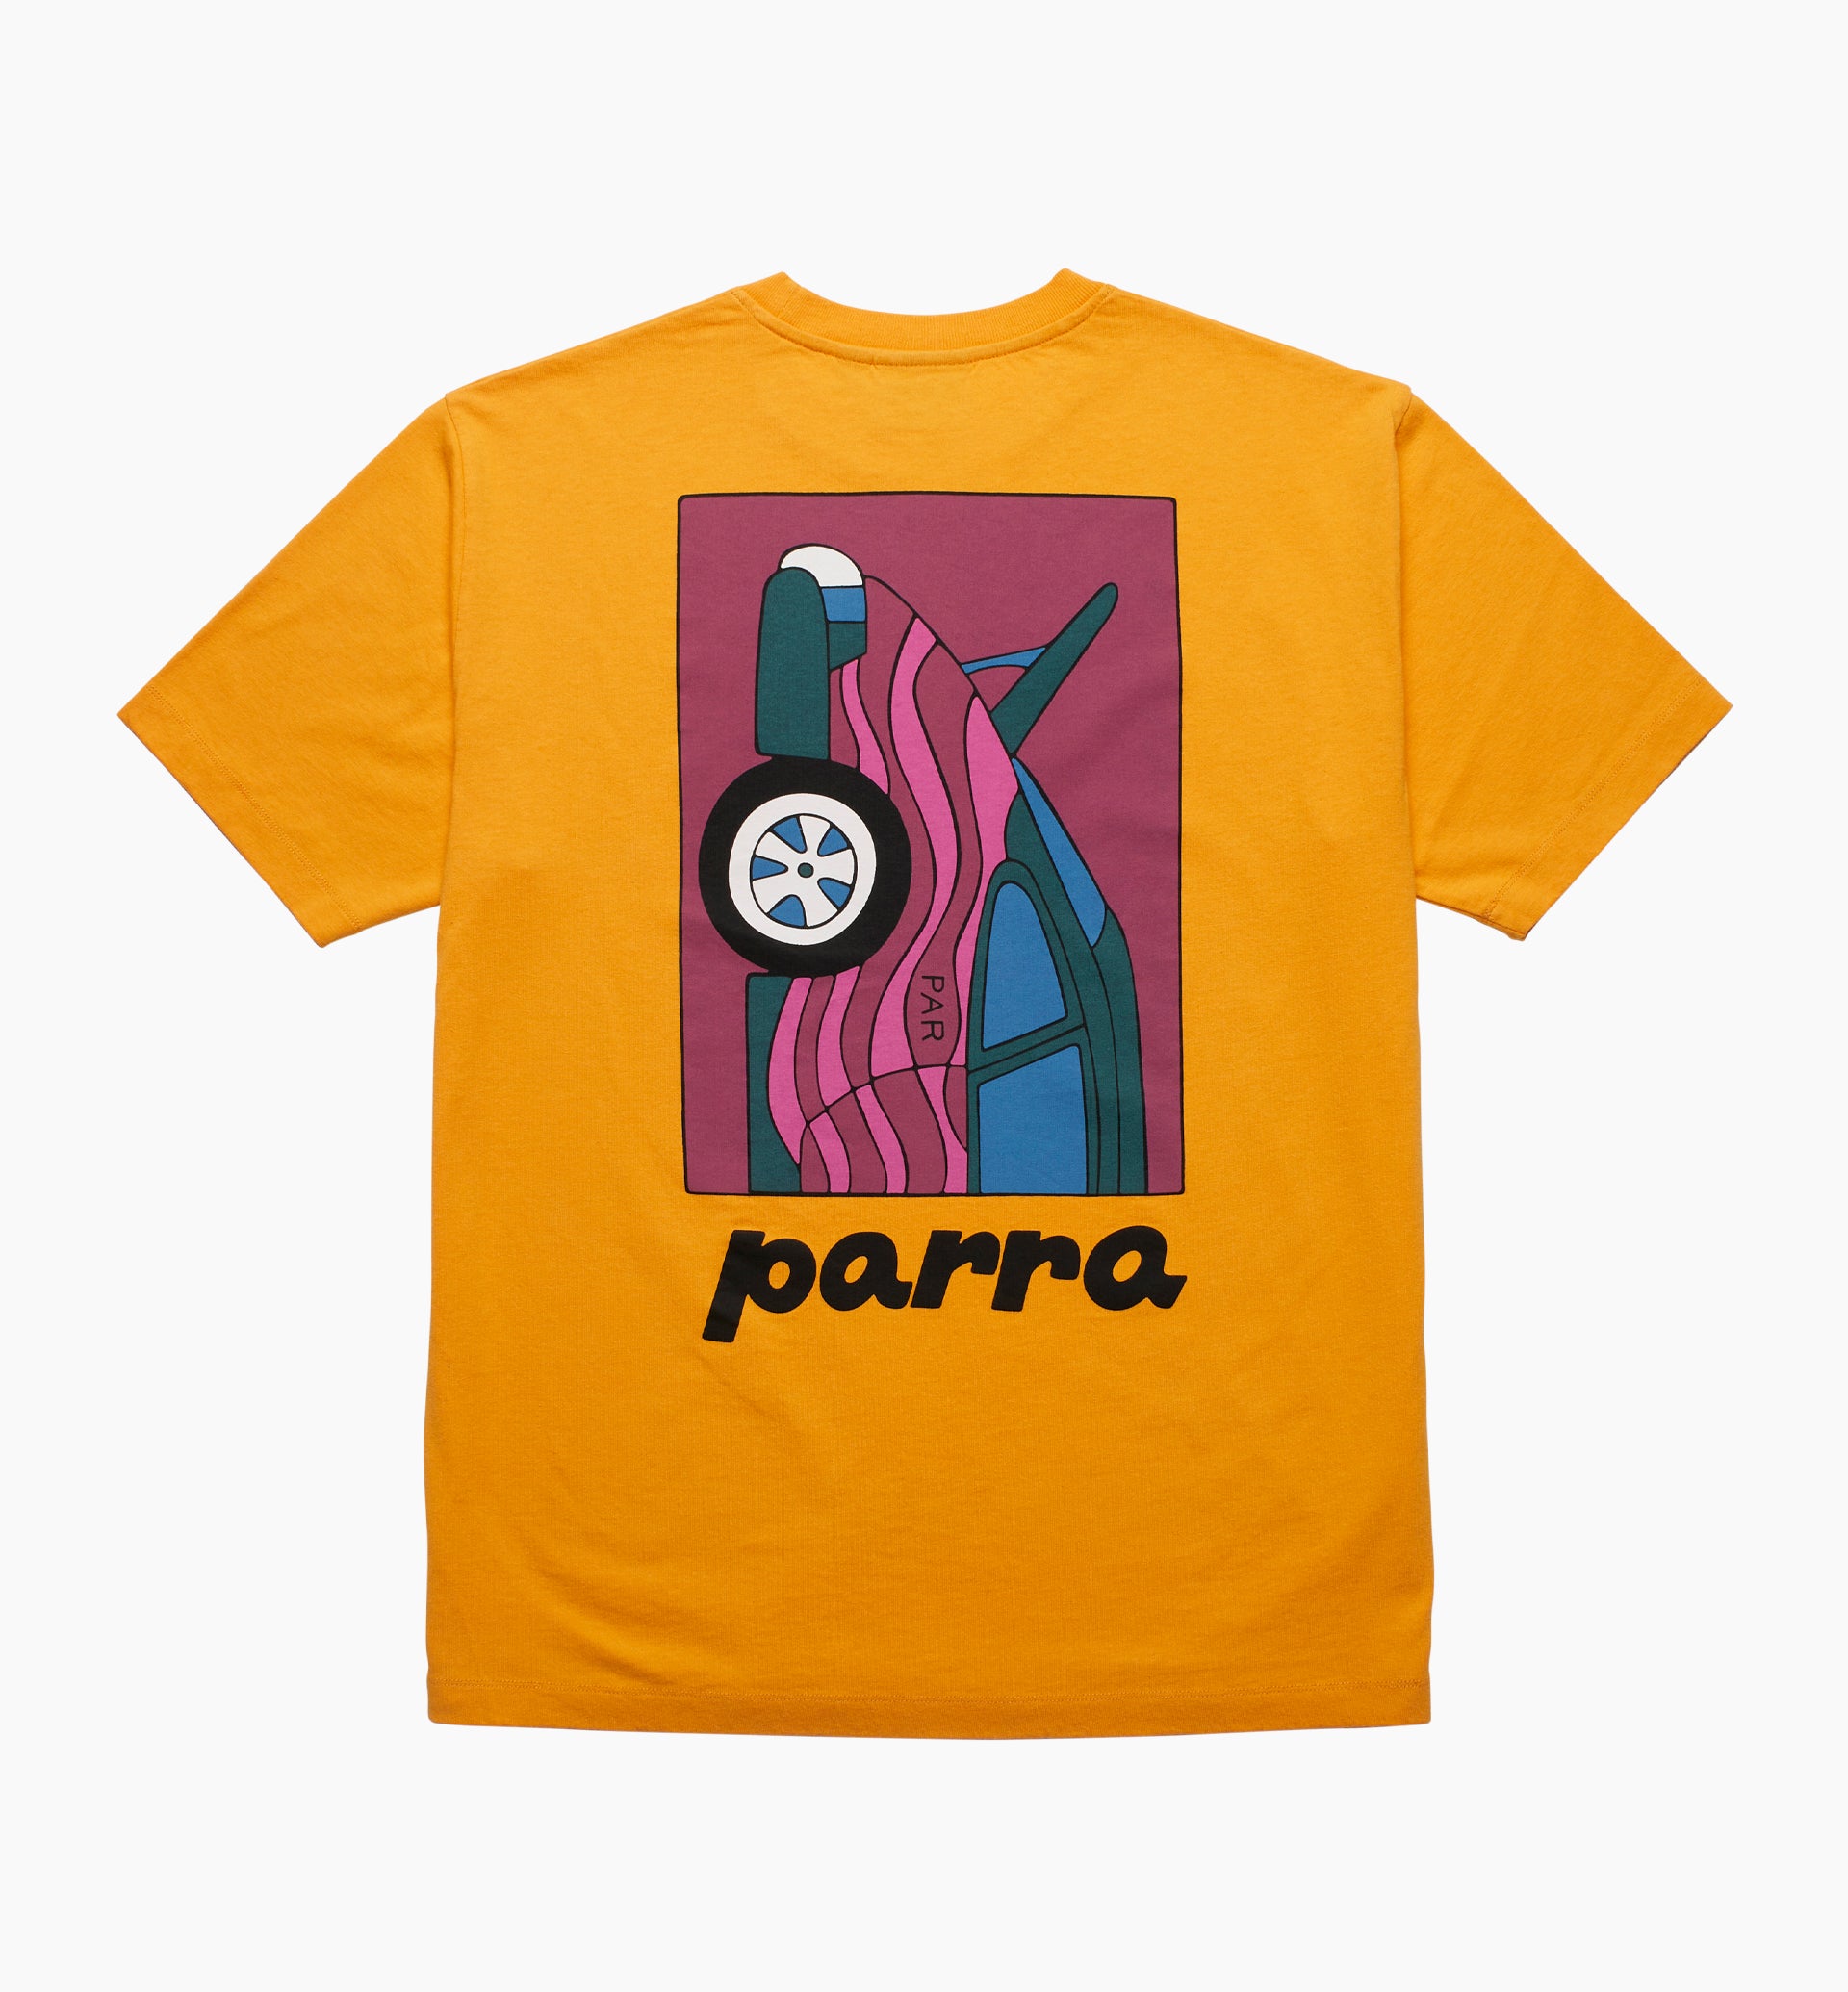 Parra - no parking t-shirt